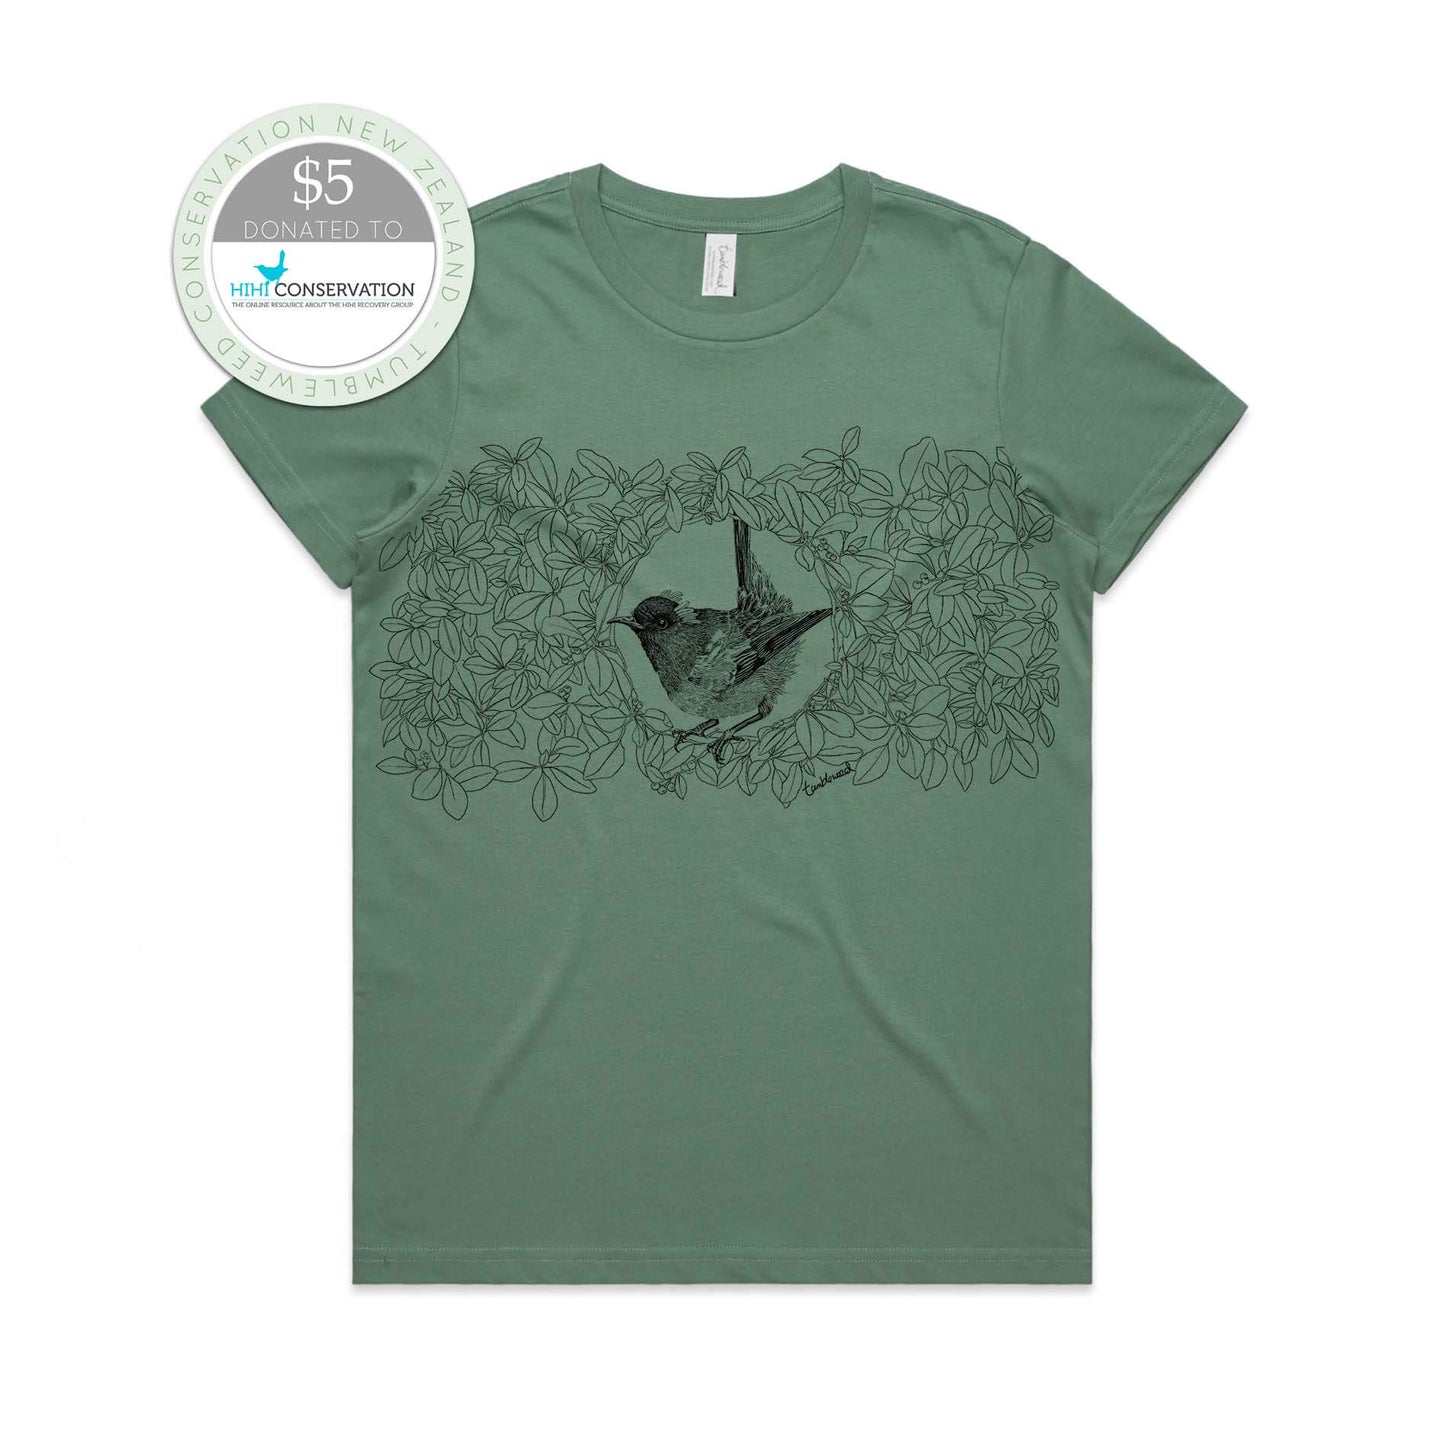 Sage, female t-shirt featuring a screen printed Hihi/Stitchbird design.